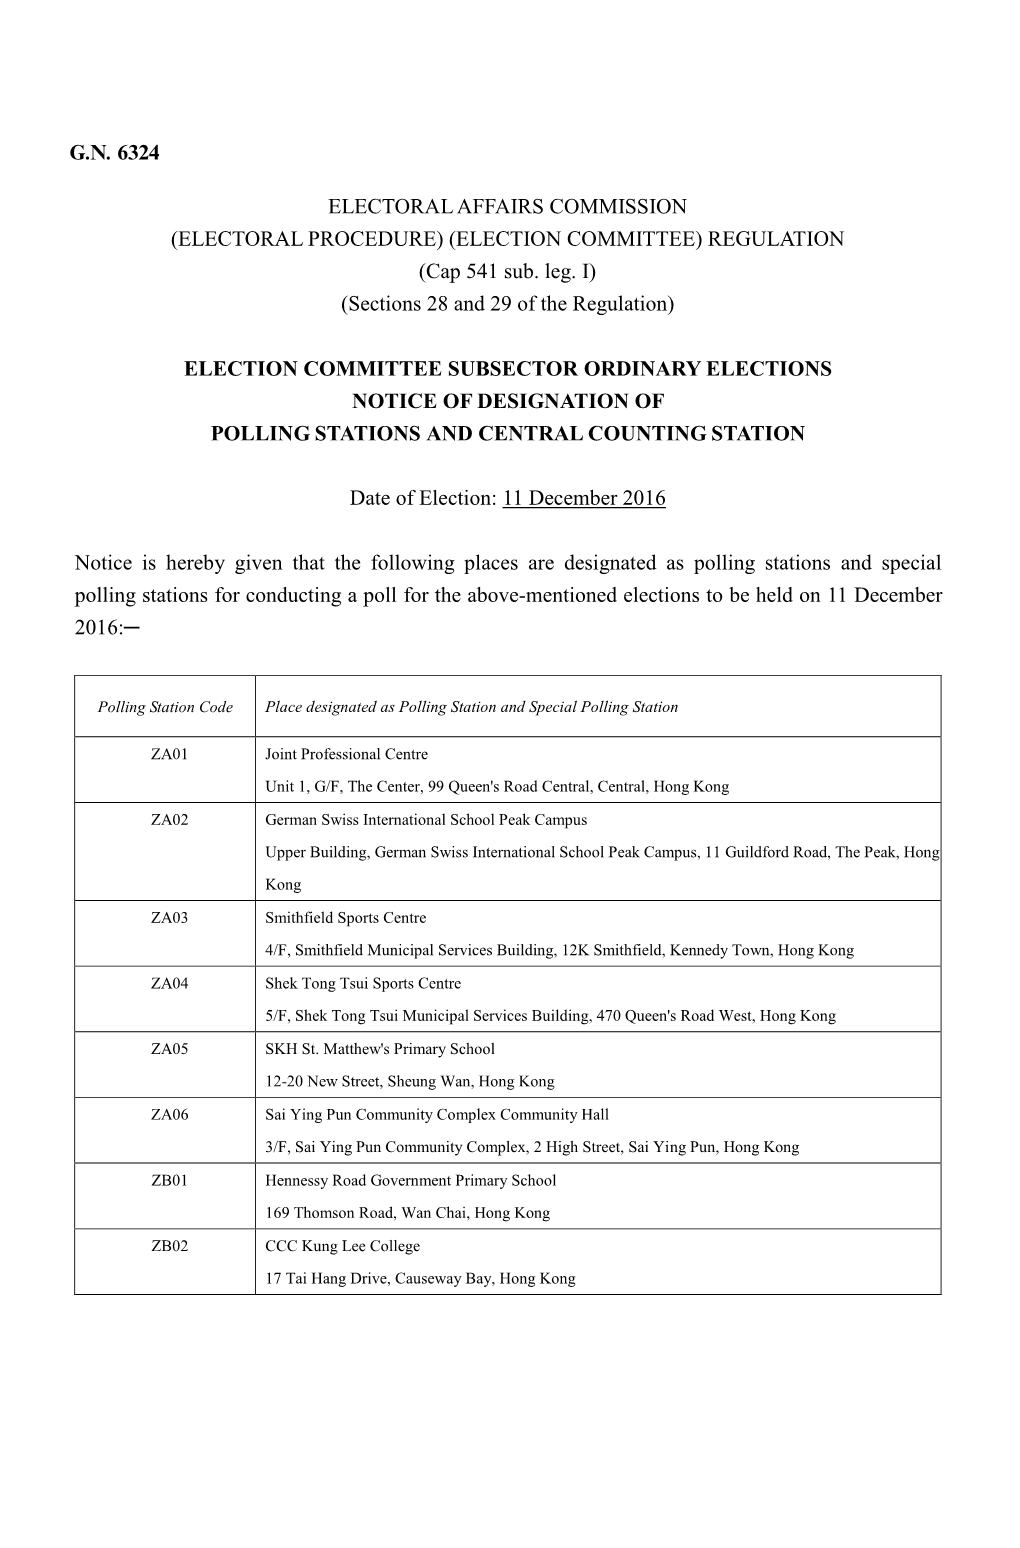 ELECTION COMMITTEE) REGULATION (Cap 541 Sub